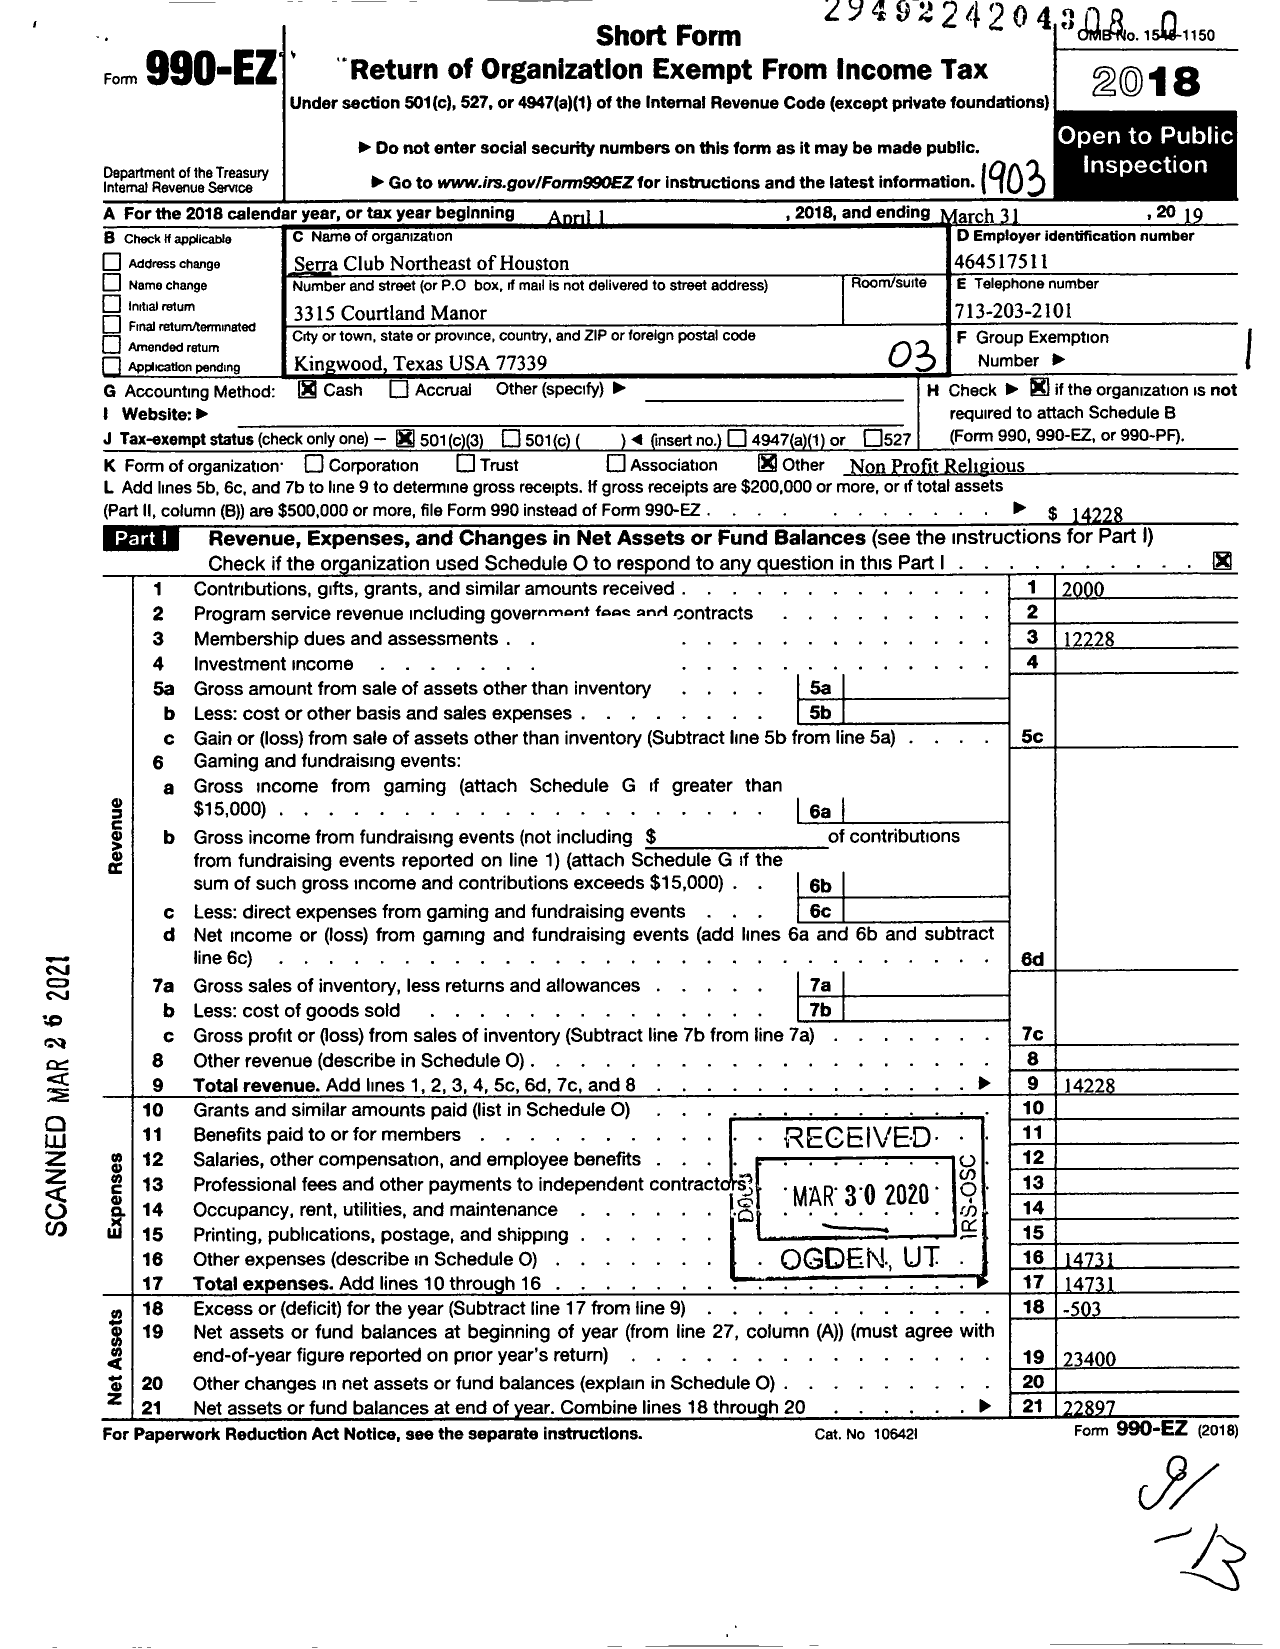 Image of first page of 2018 Form 990EZ for Serra International - 1170 Northeast of Houston Serra Clu